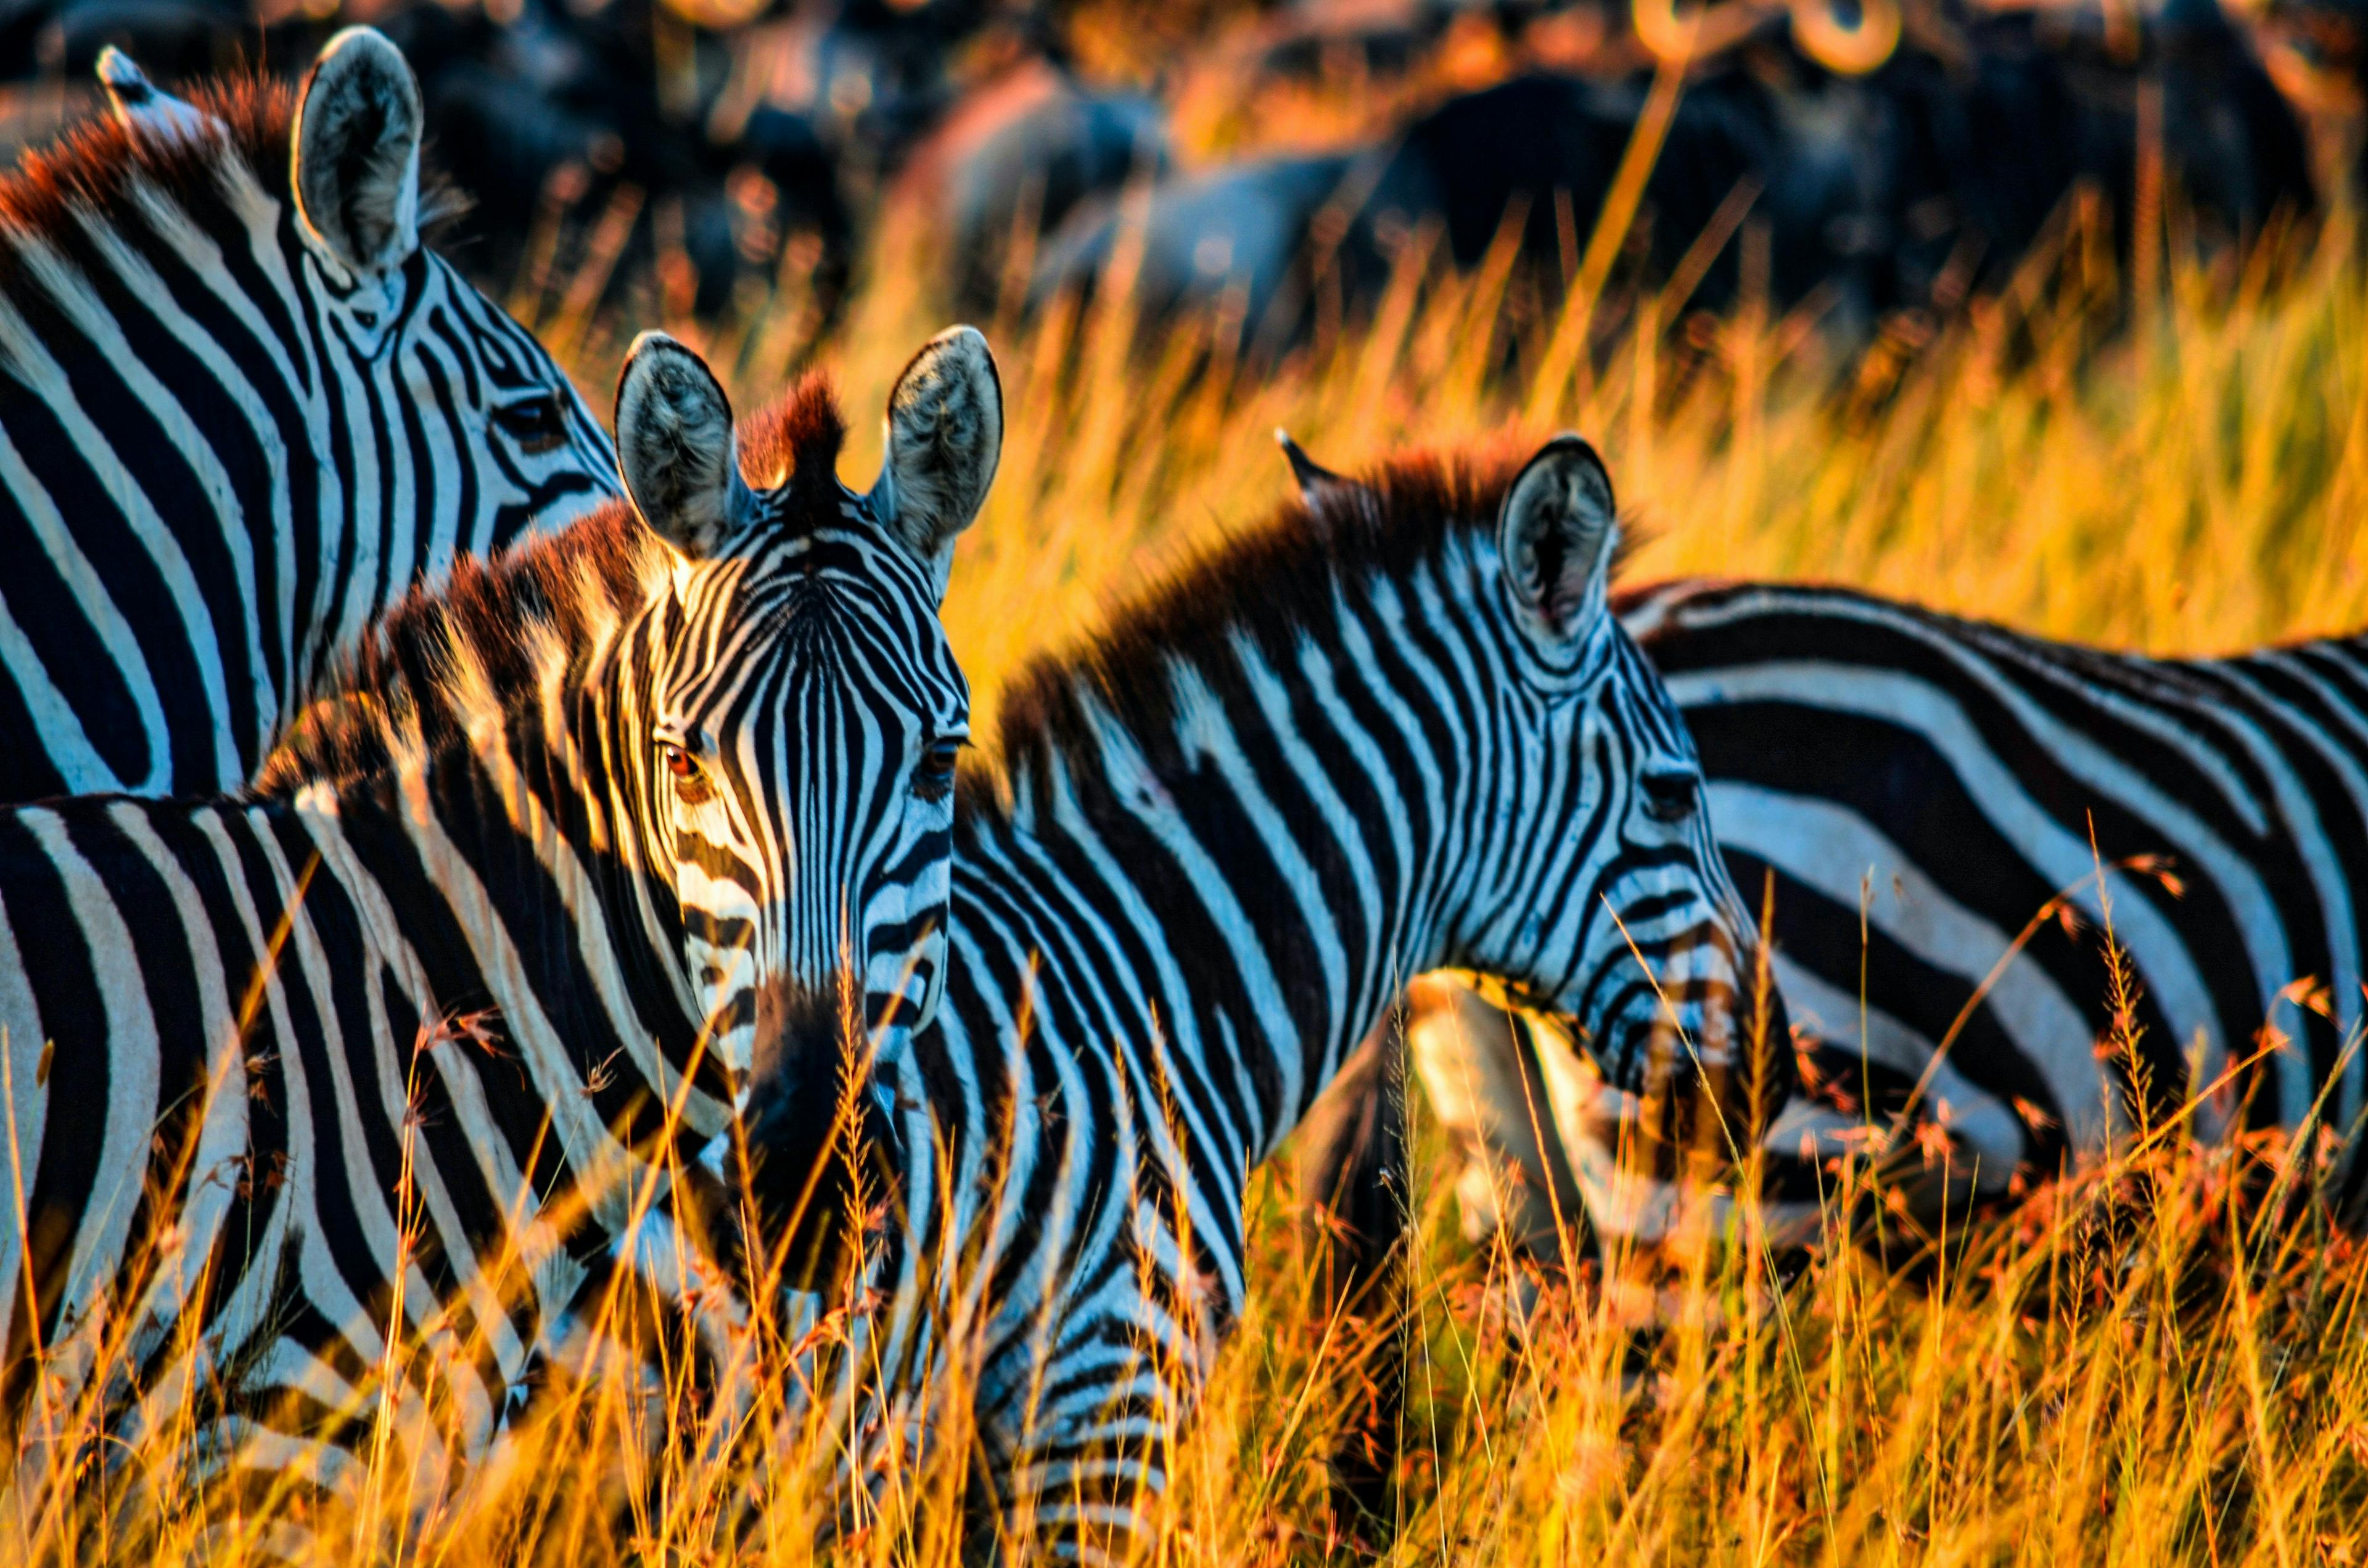 Zebras in Maasai National Reserve in Kenya.